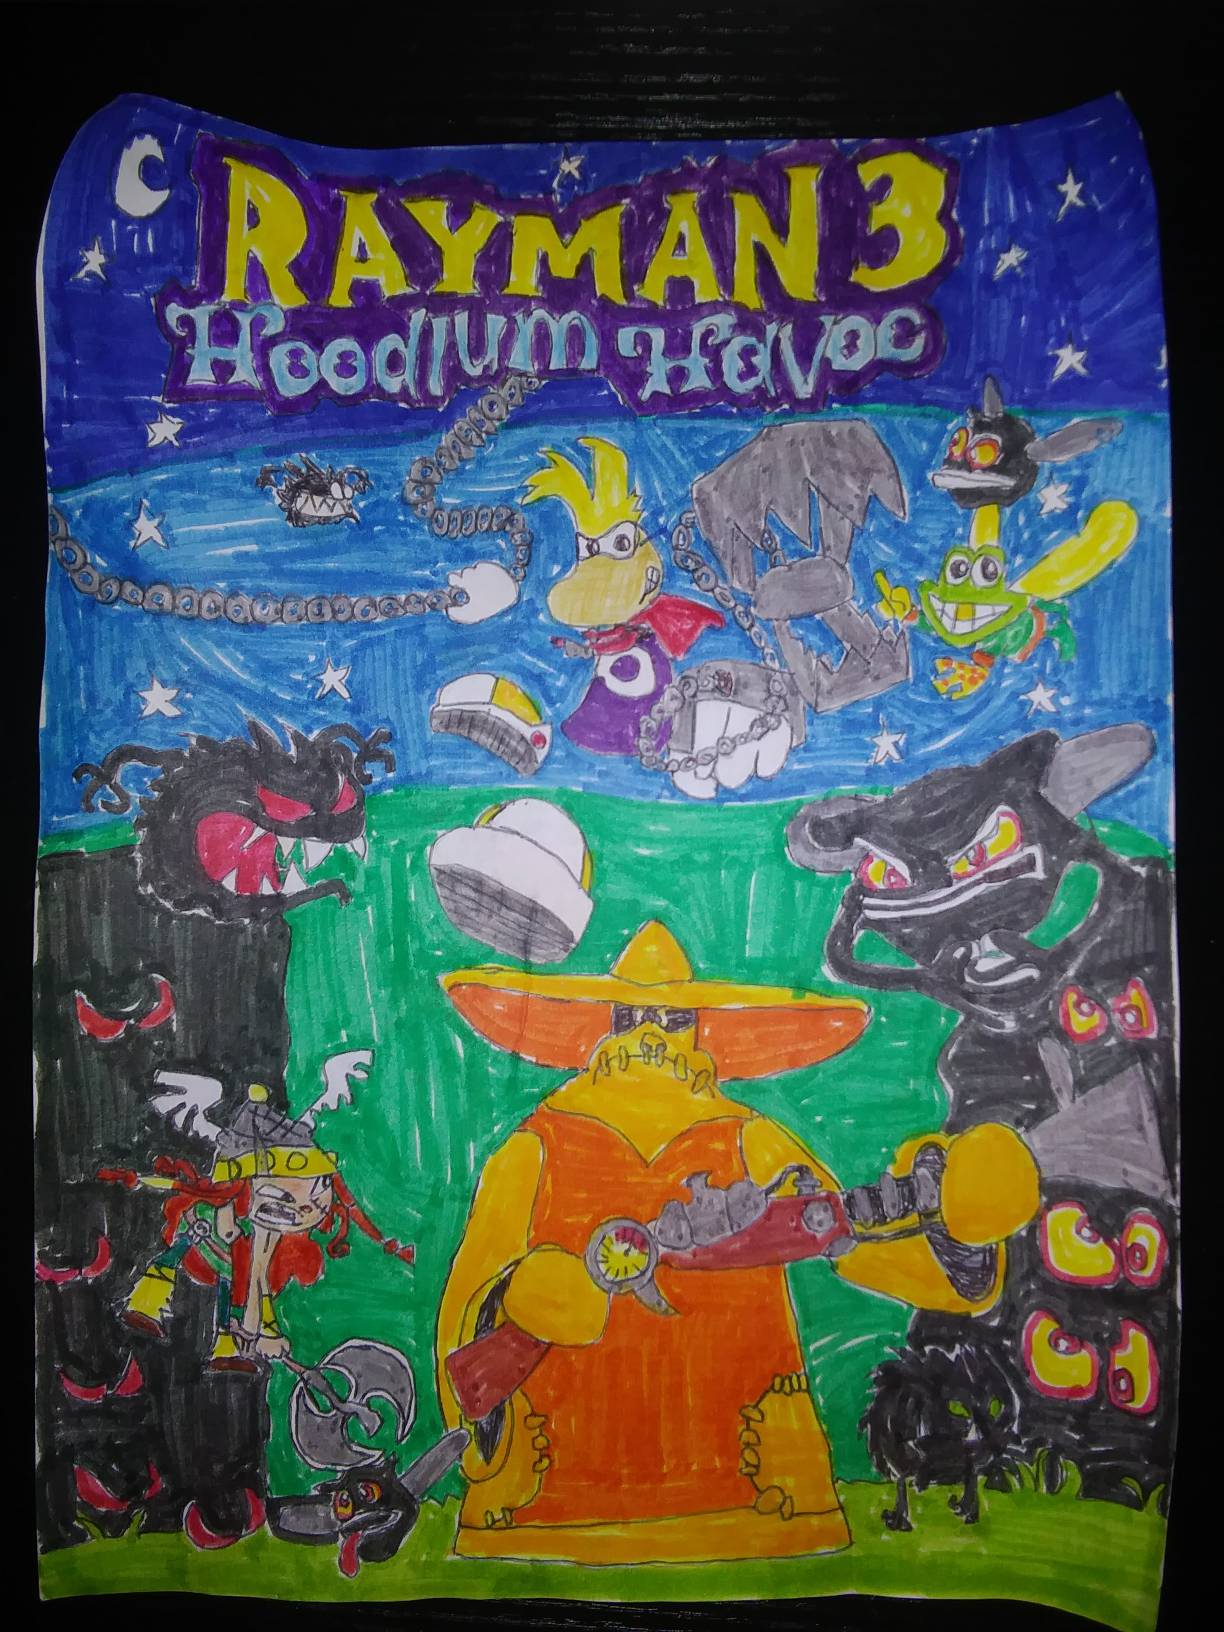 Rayman - The Evil Three by Turquoisephoenix on DeviantArt